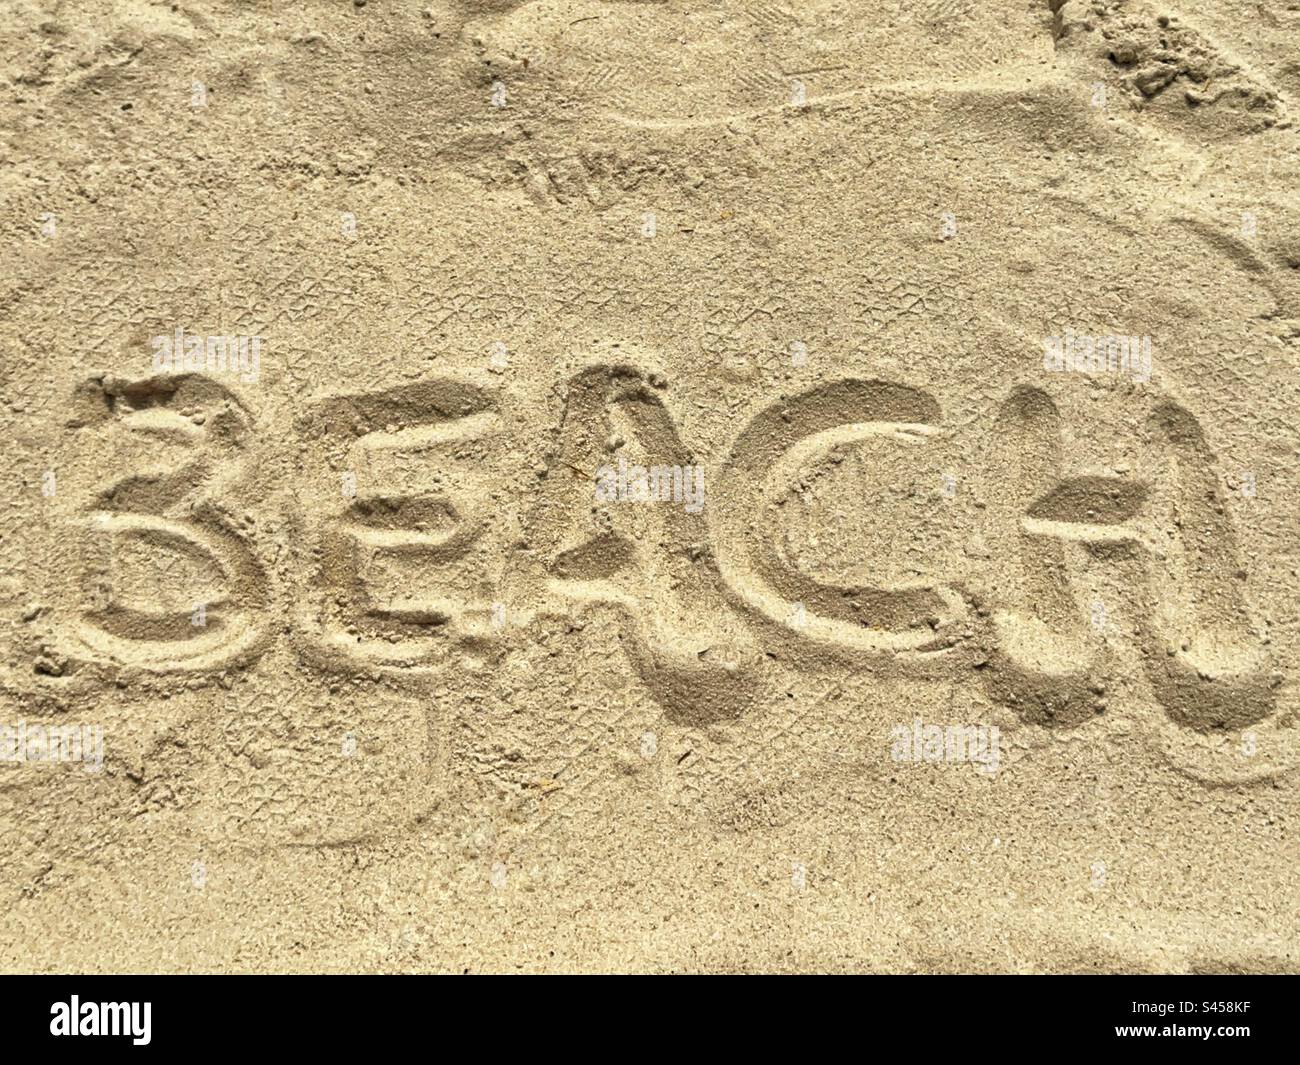 The word “Beach” written in fine sand on a tropical beach. Stock Photo